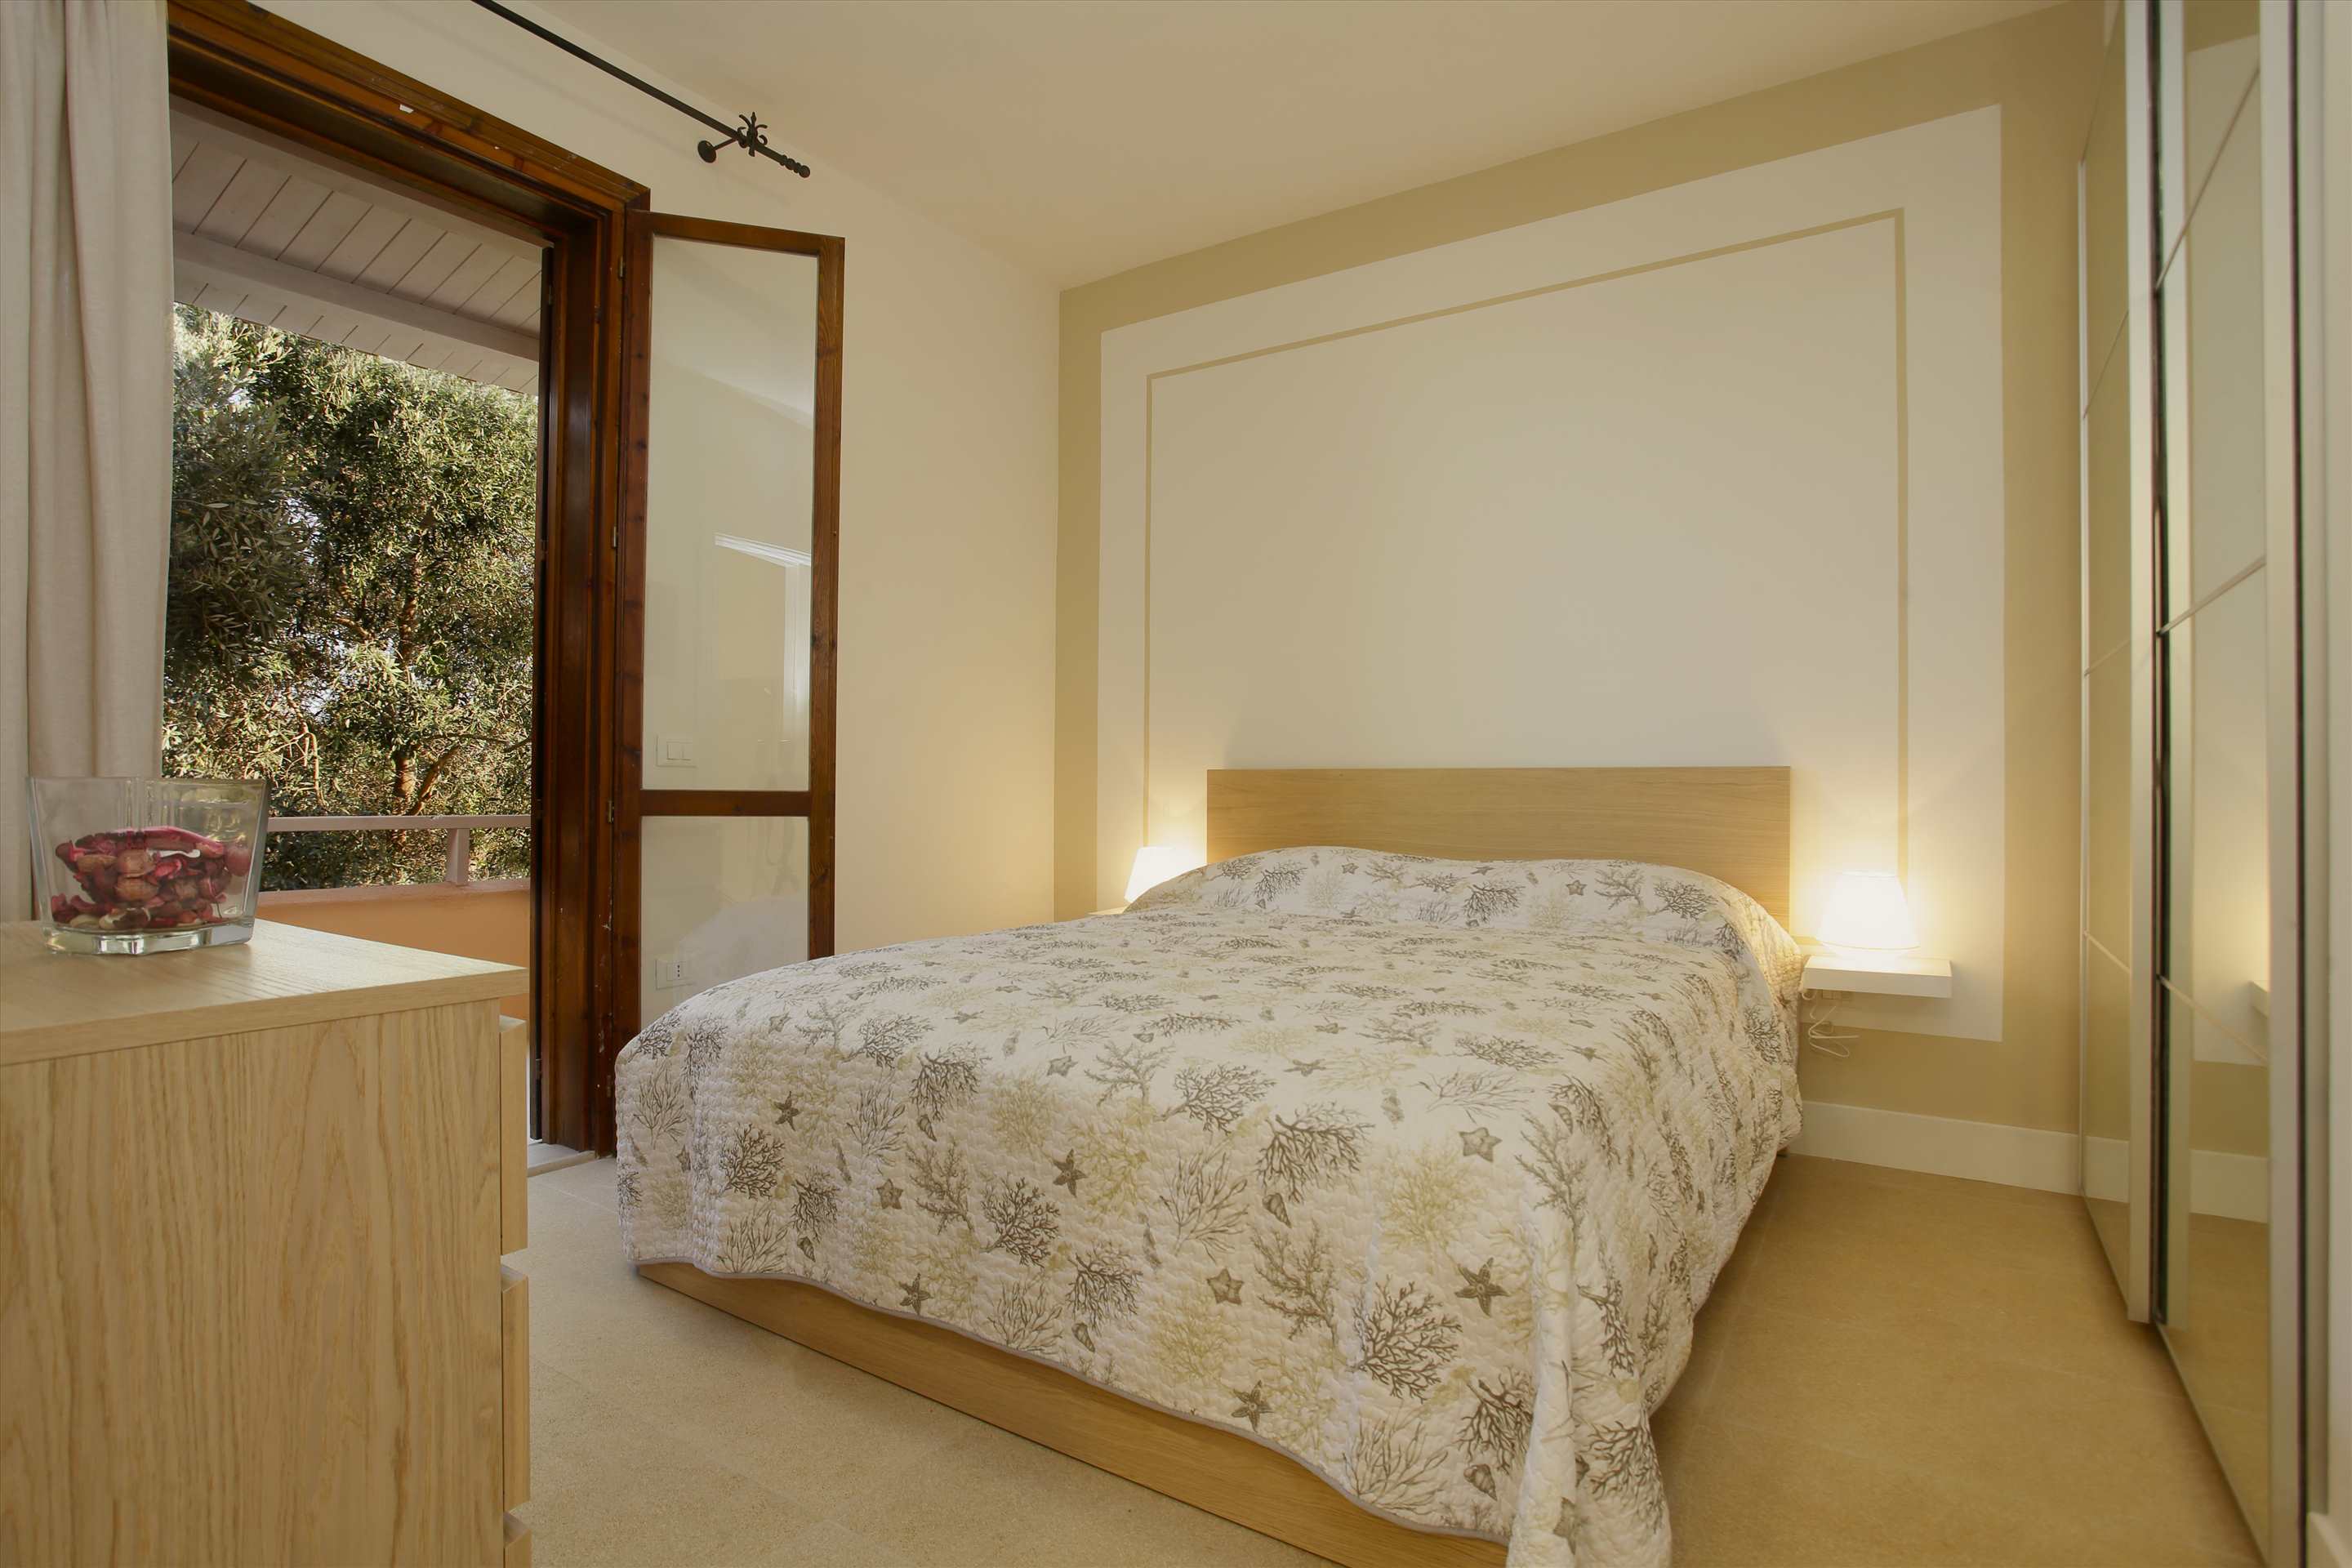 Villa Dei Coralli, 2 bedroom villa in Western Sicily, Sicily Photo #9